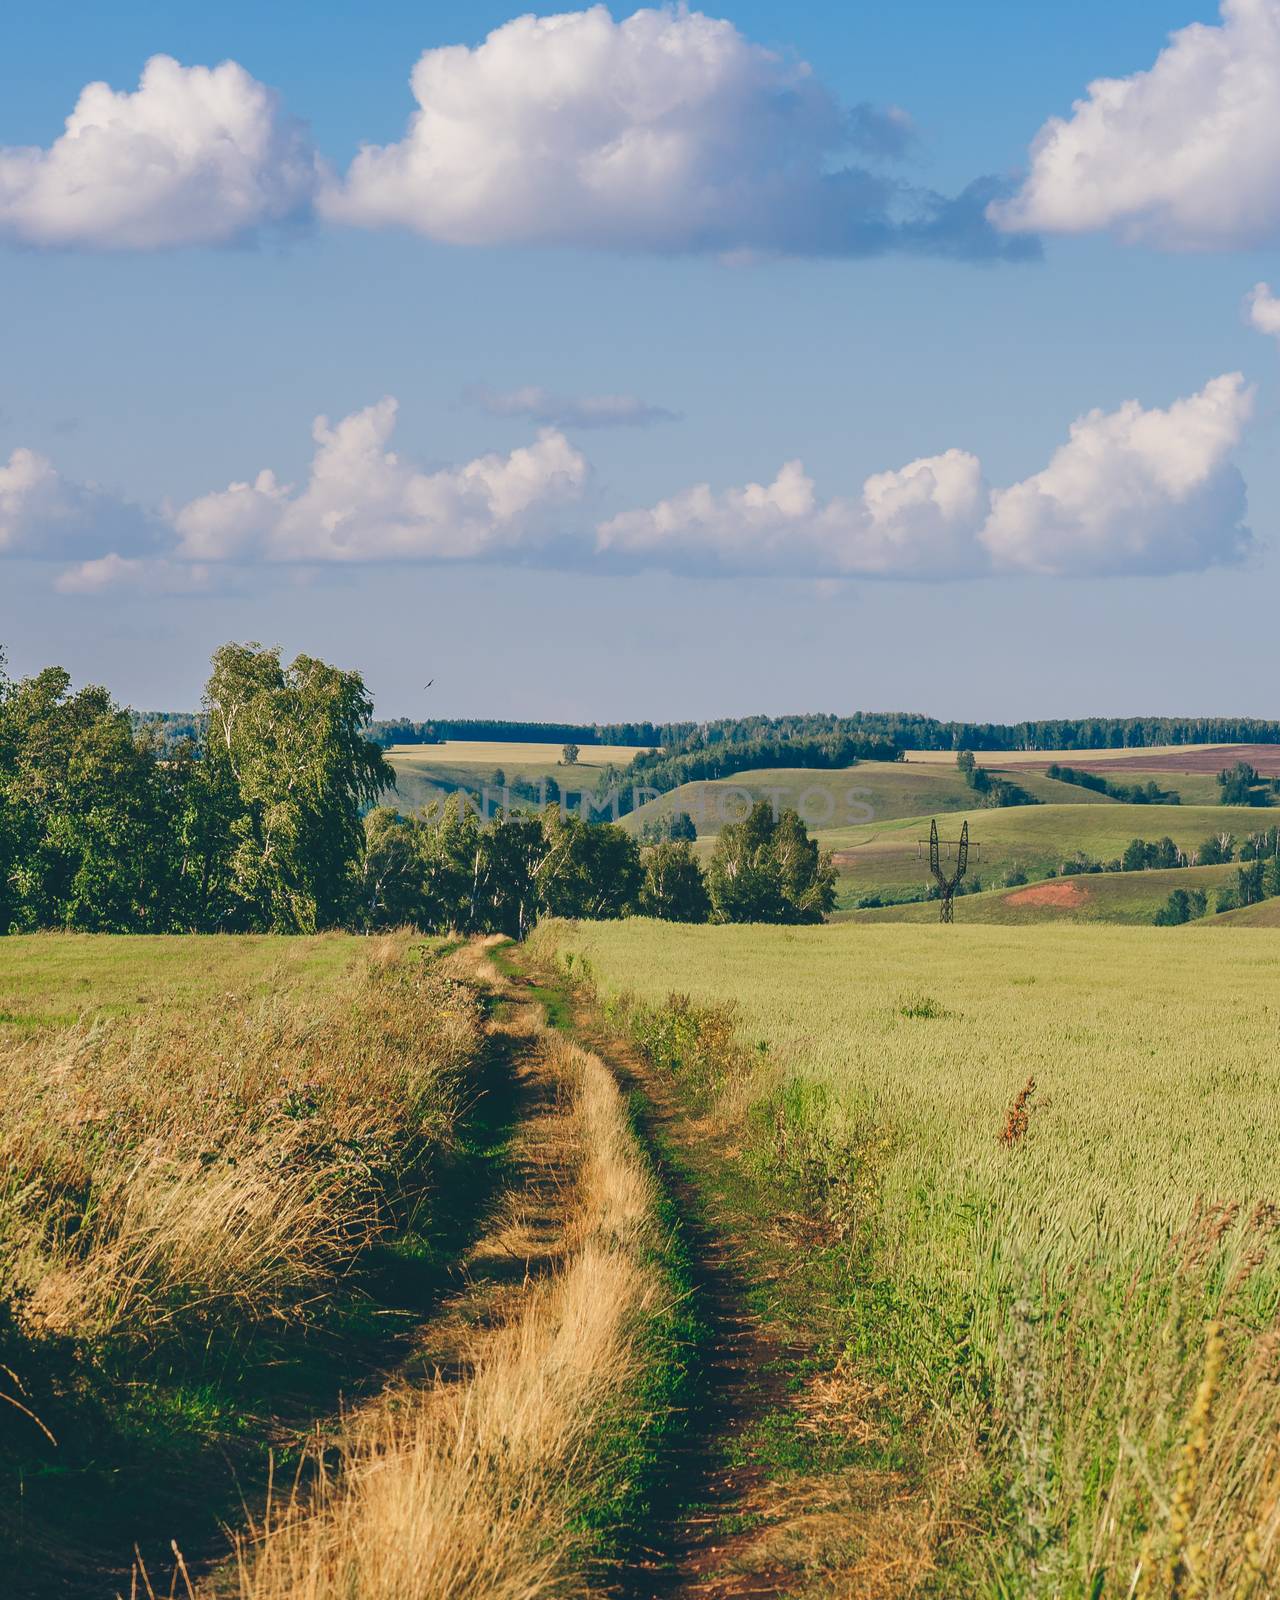 Country Road in Field. by Seva_blsv